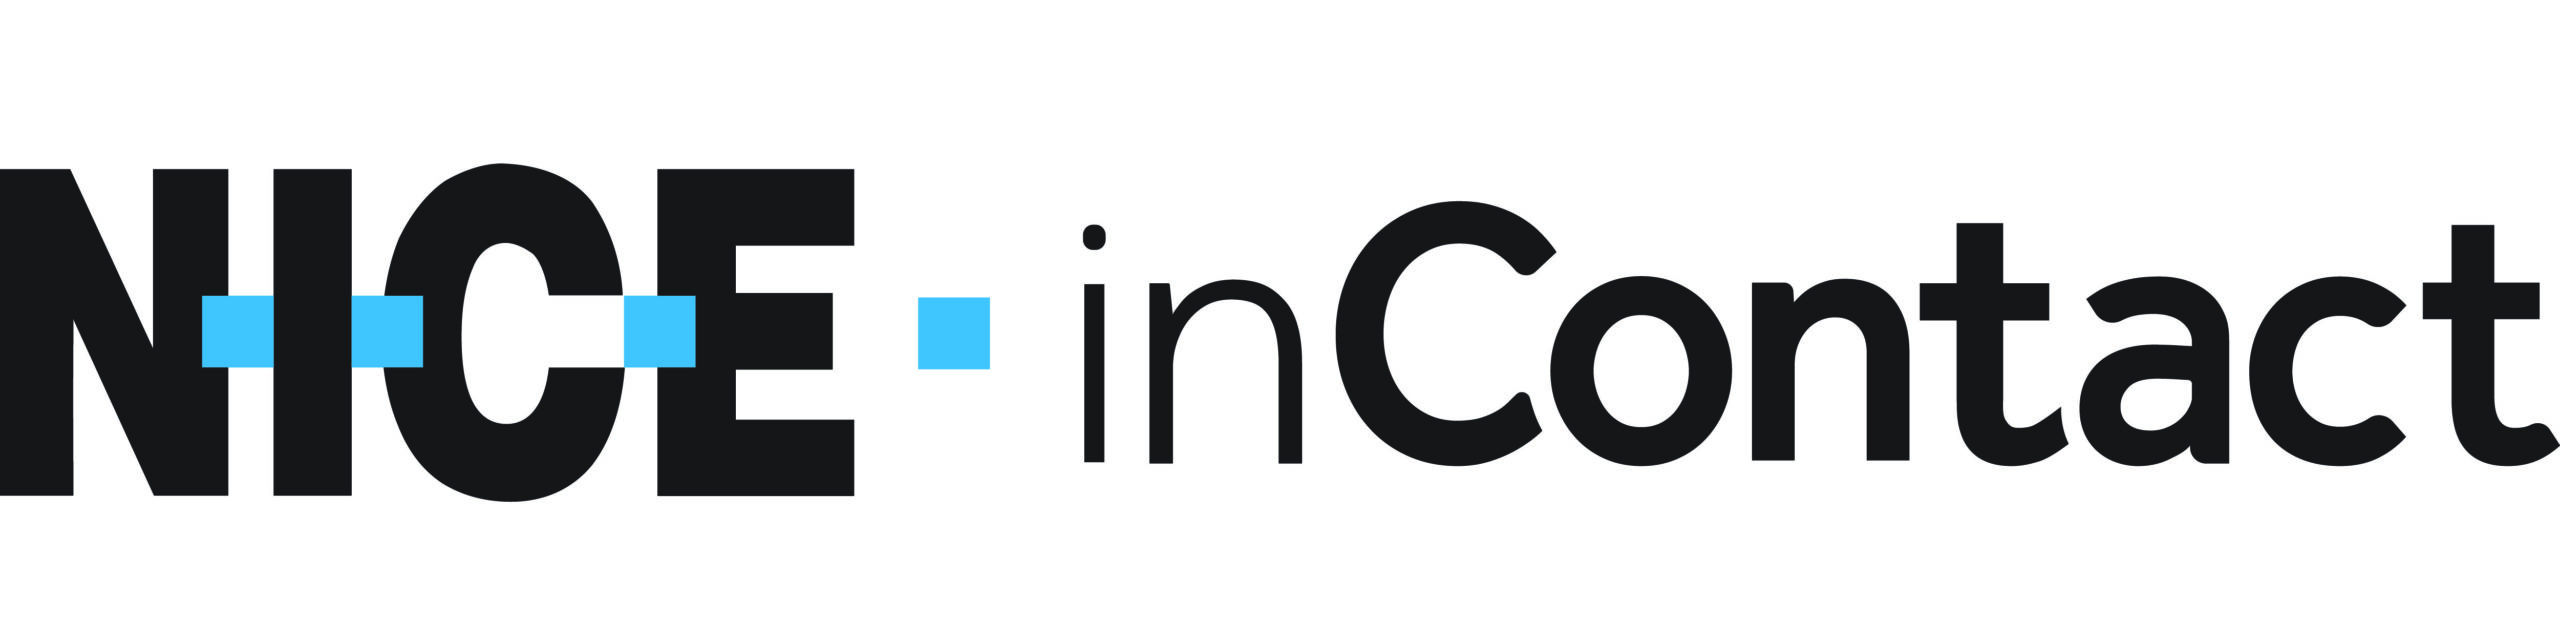 incontent-logo-1-scaled